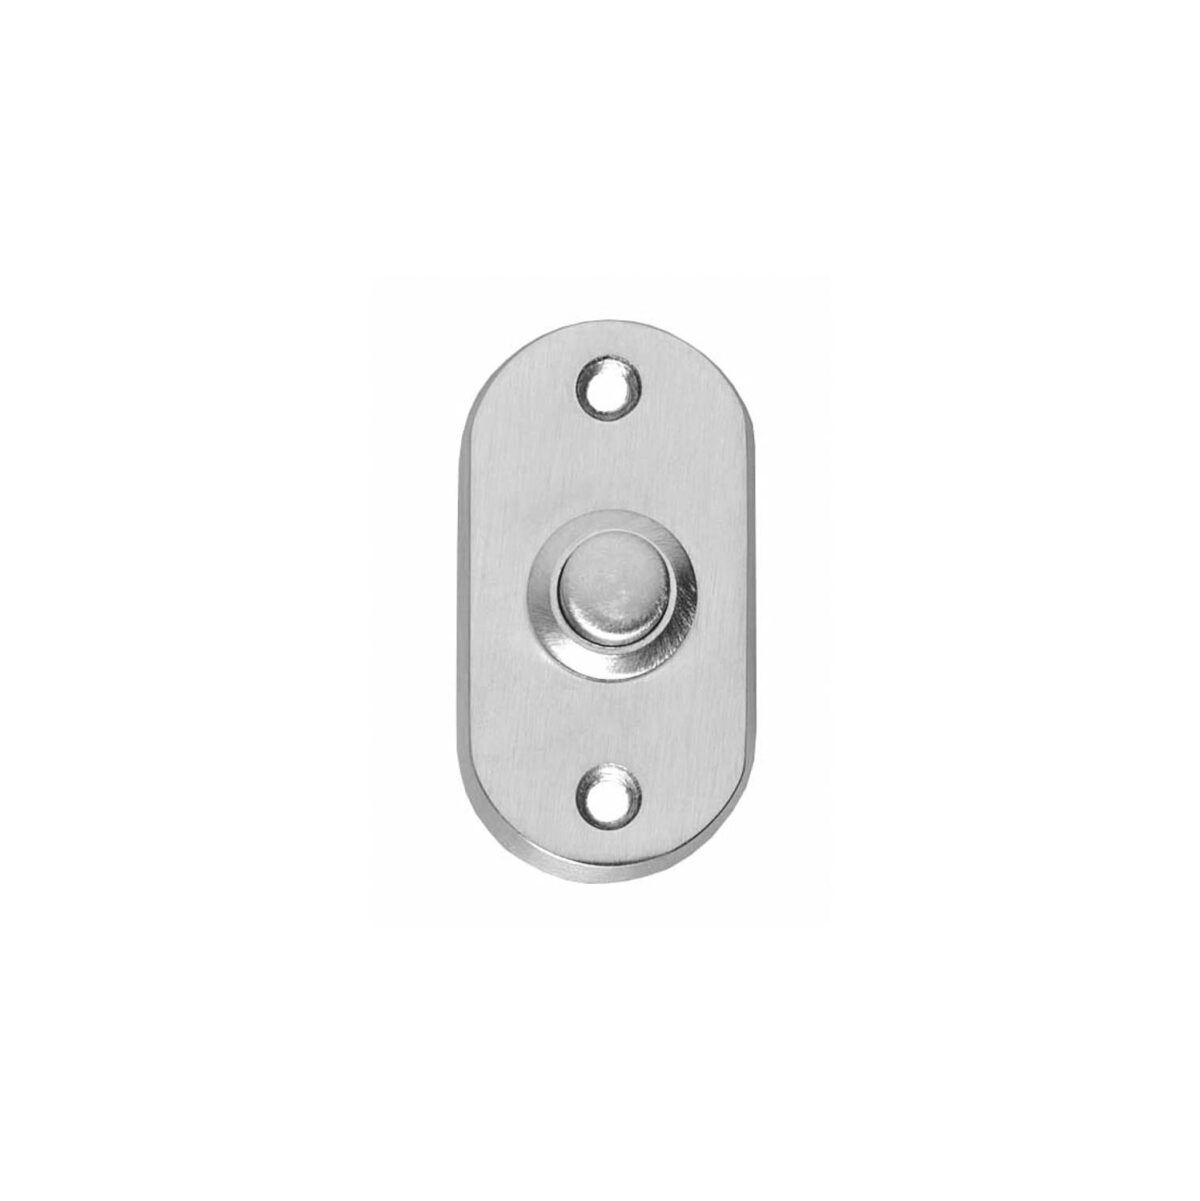 doorbell oval chrome matt, doorbell, ring doorbell, doorbells, pull bell, ding dong doorbell, doorbell set